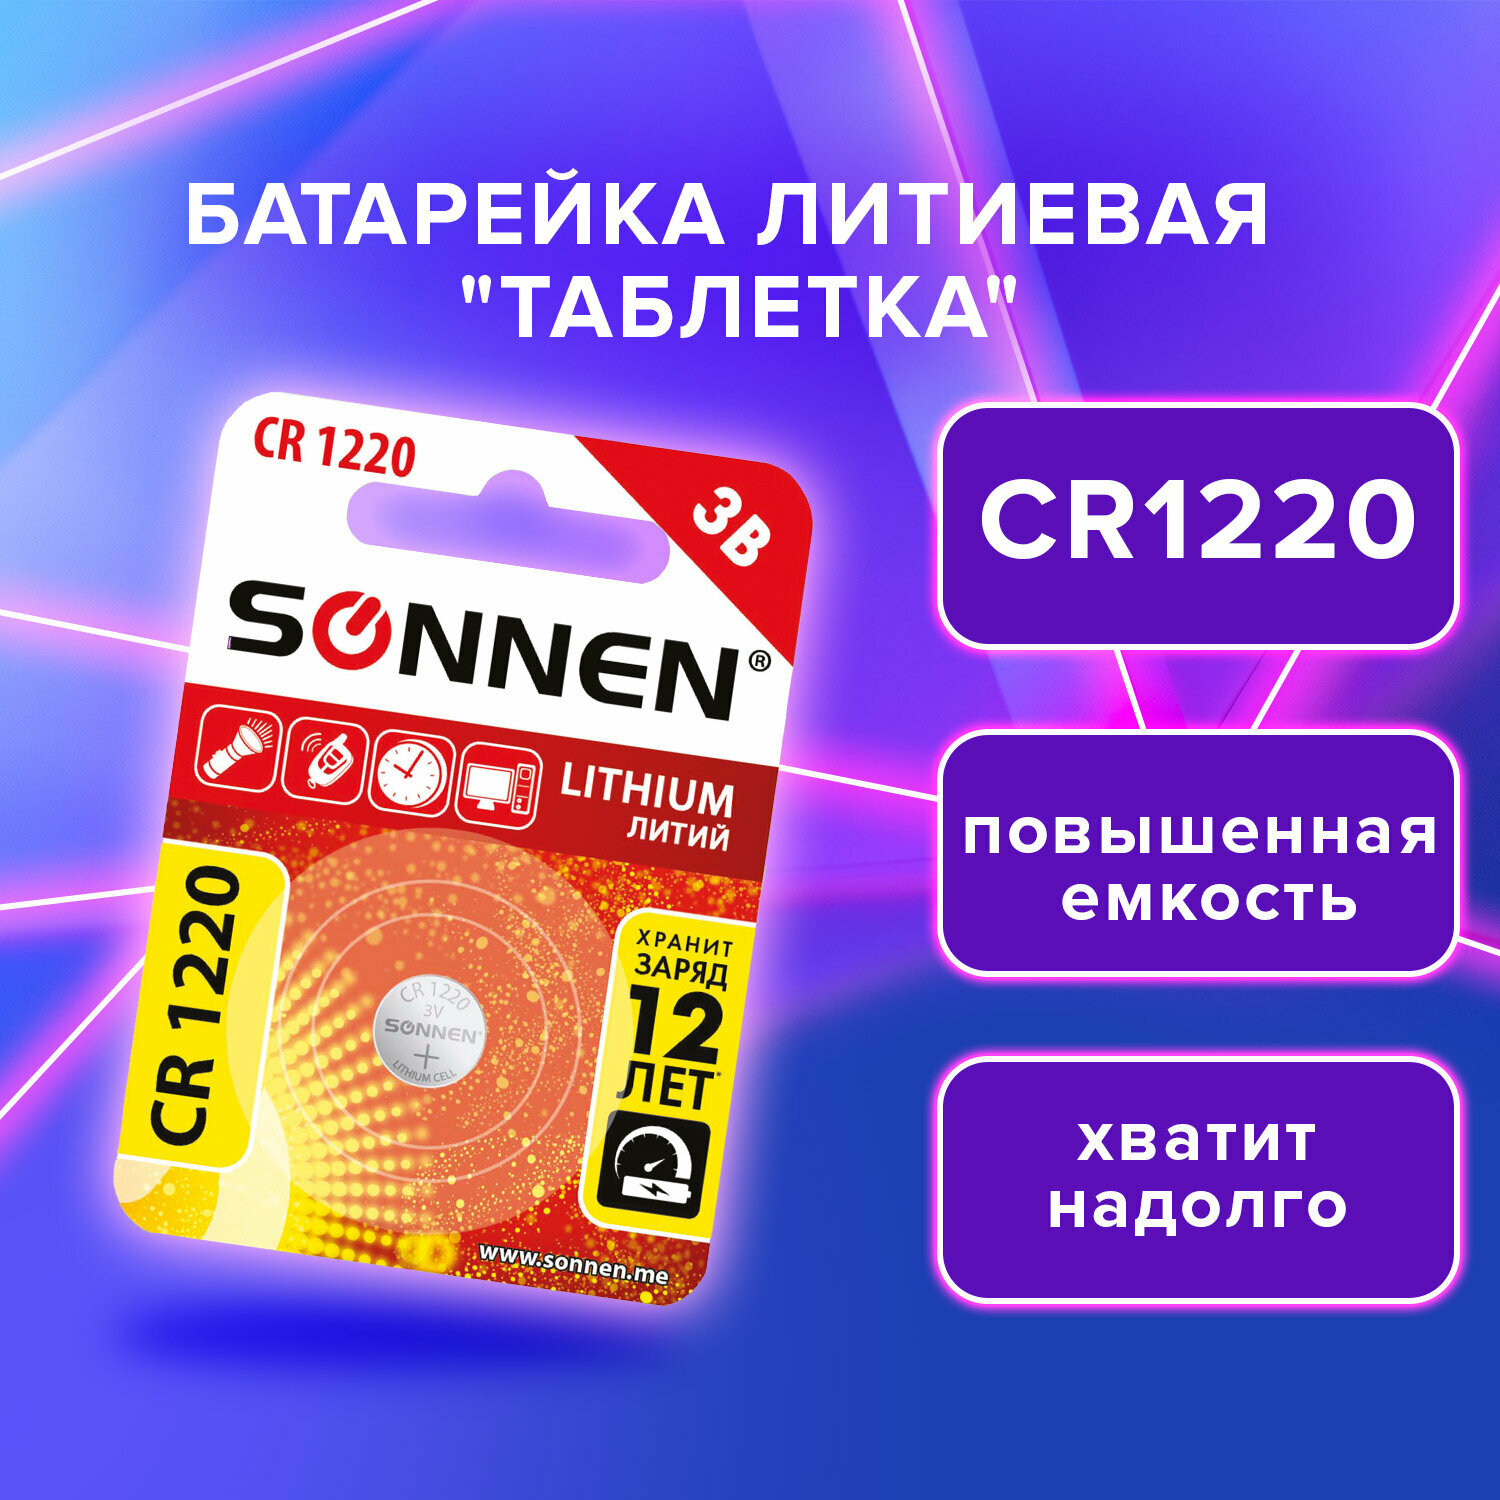 Батарейка литиевая CR1220 1 шт. "таблетка дисковая кнопочная" SONNEN Lithium в блистере 455597